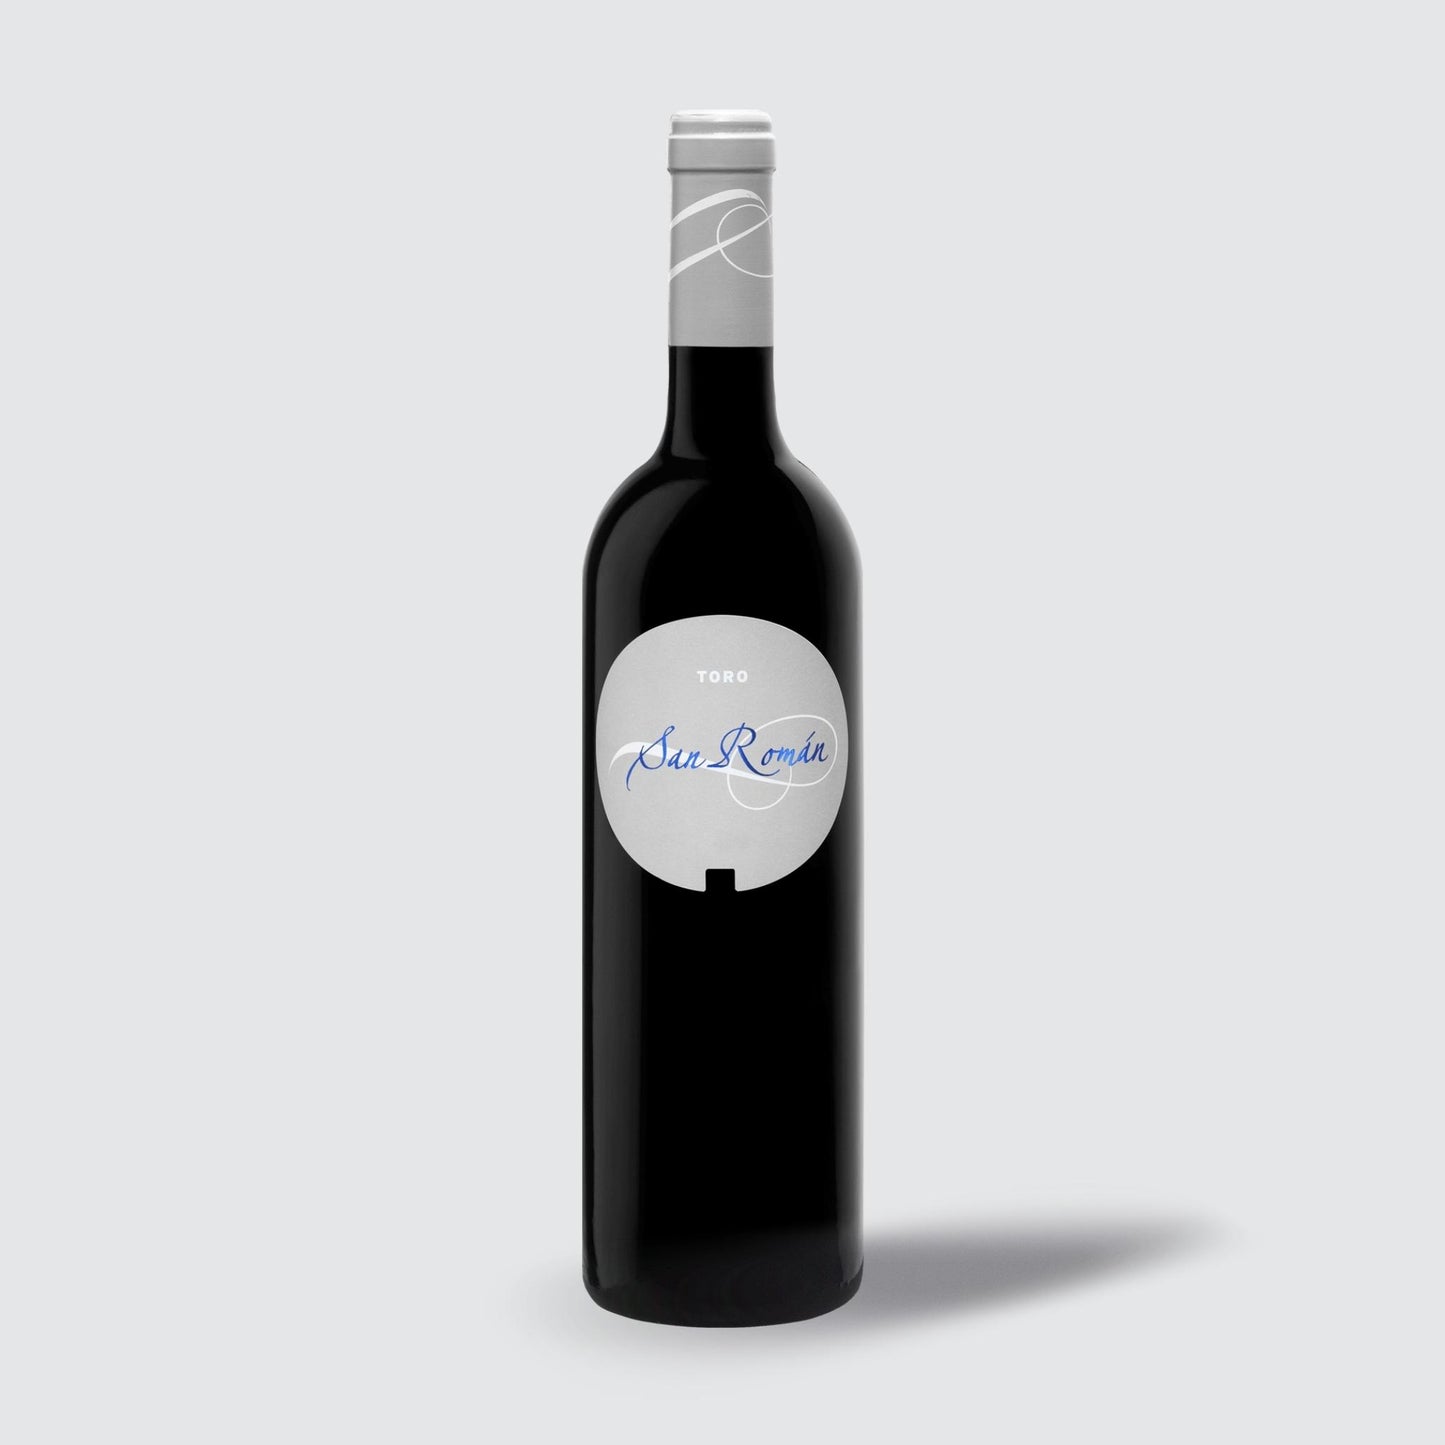 Bodegas y Vinedos San Roman Toro 2015 Red wine